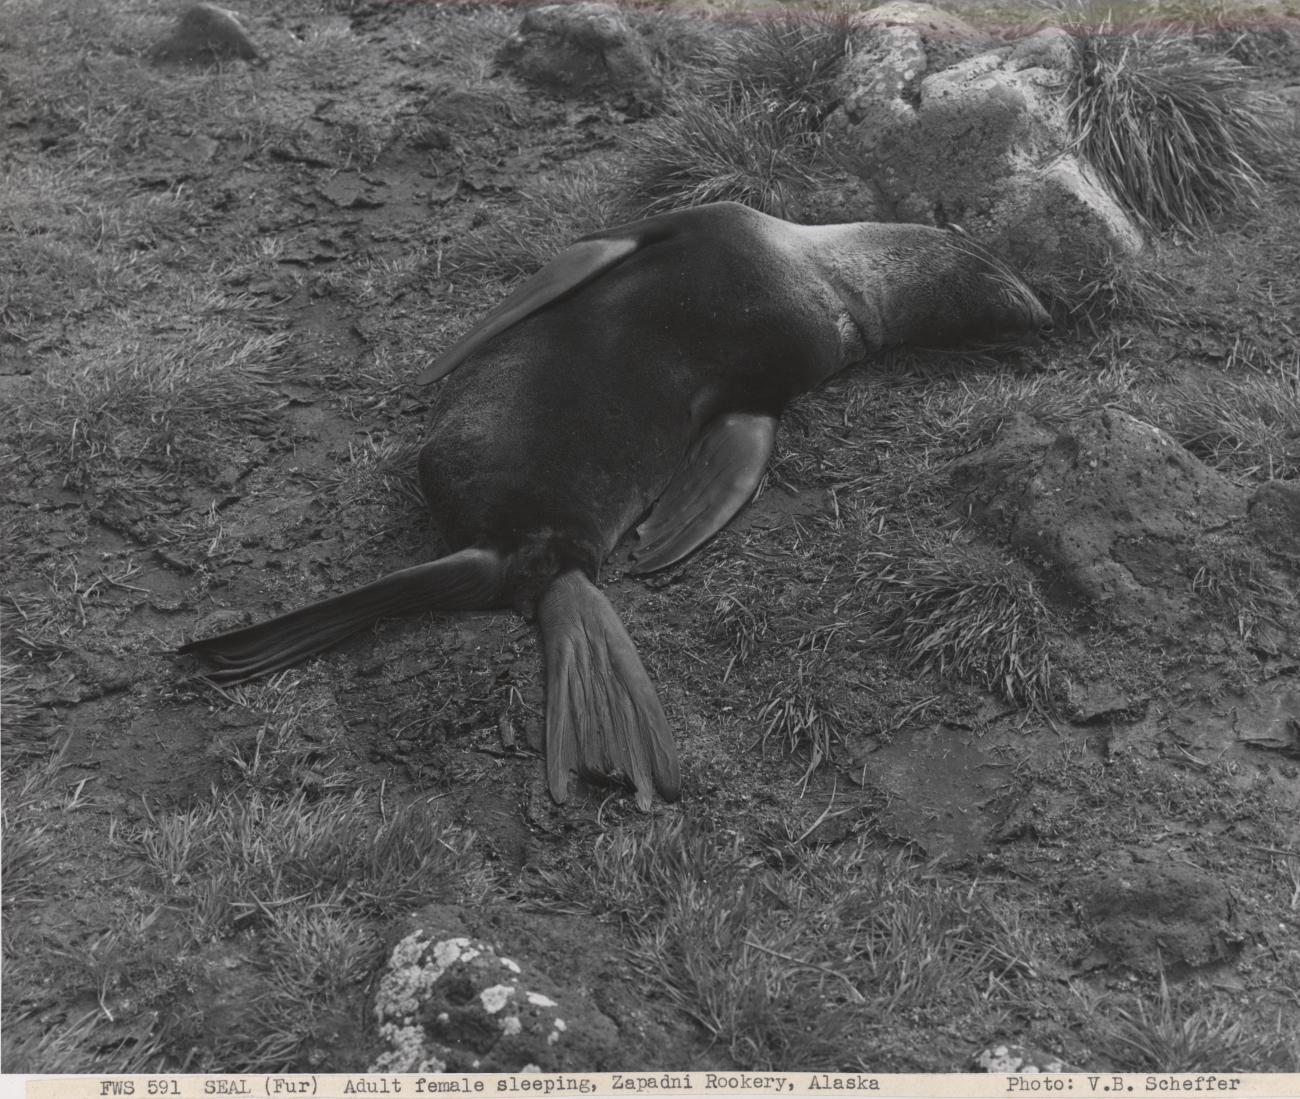 Adult female fur seal sleeping at Zapadni Rookery